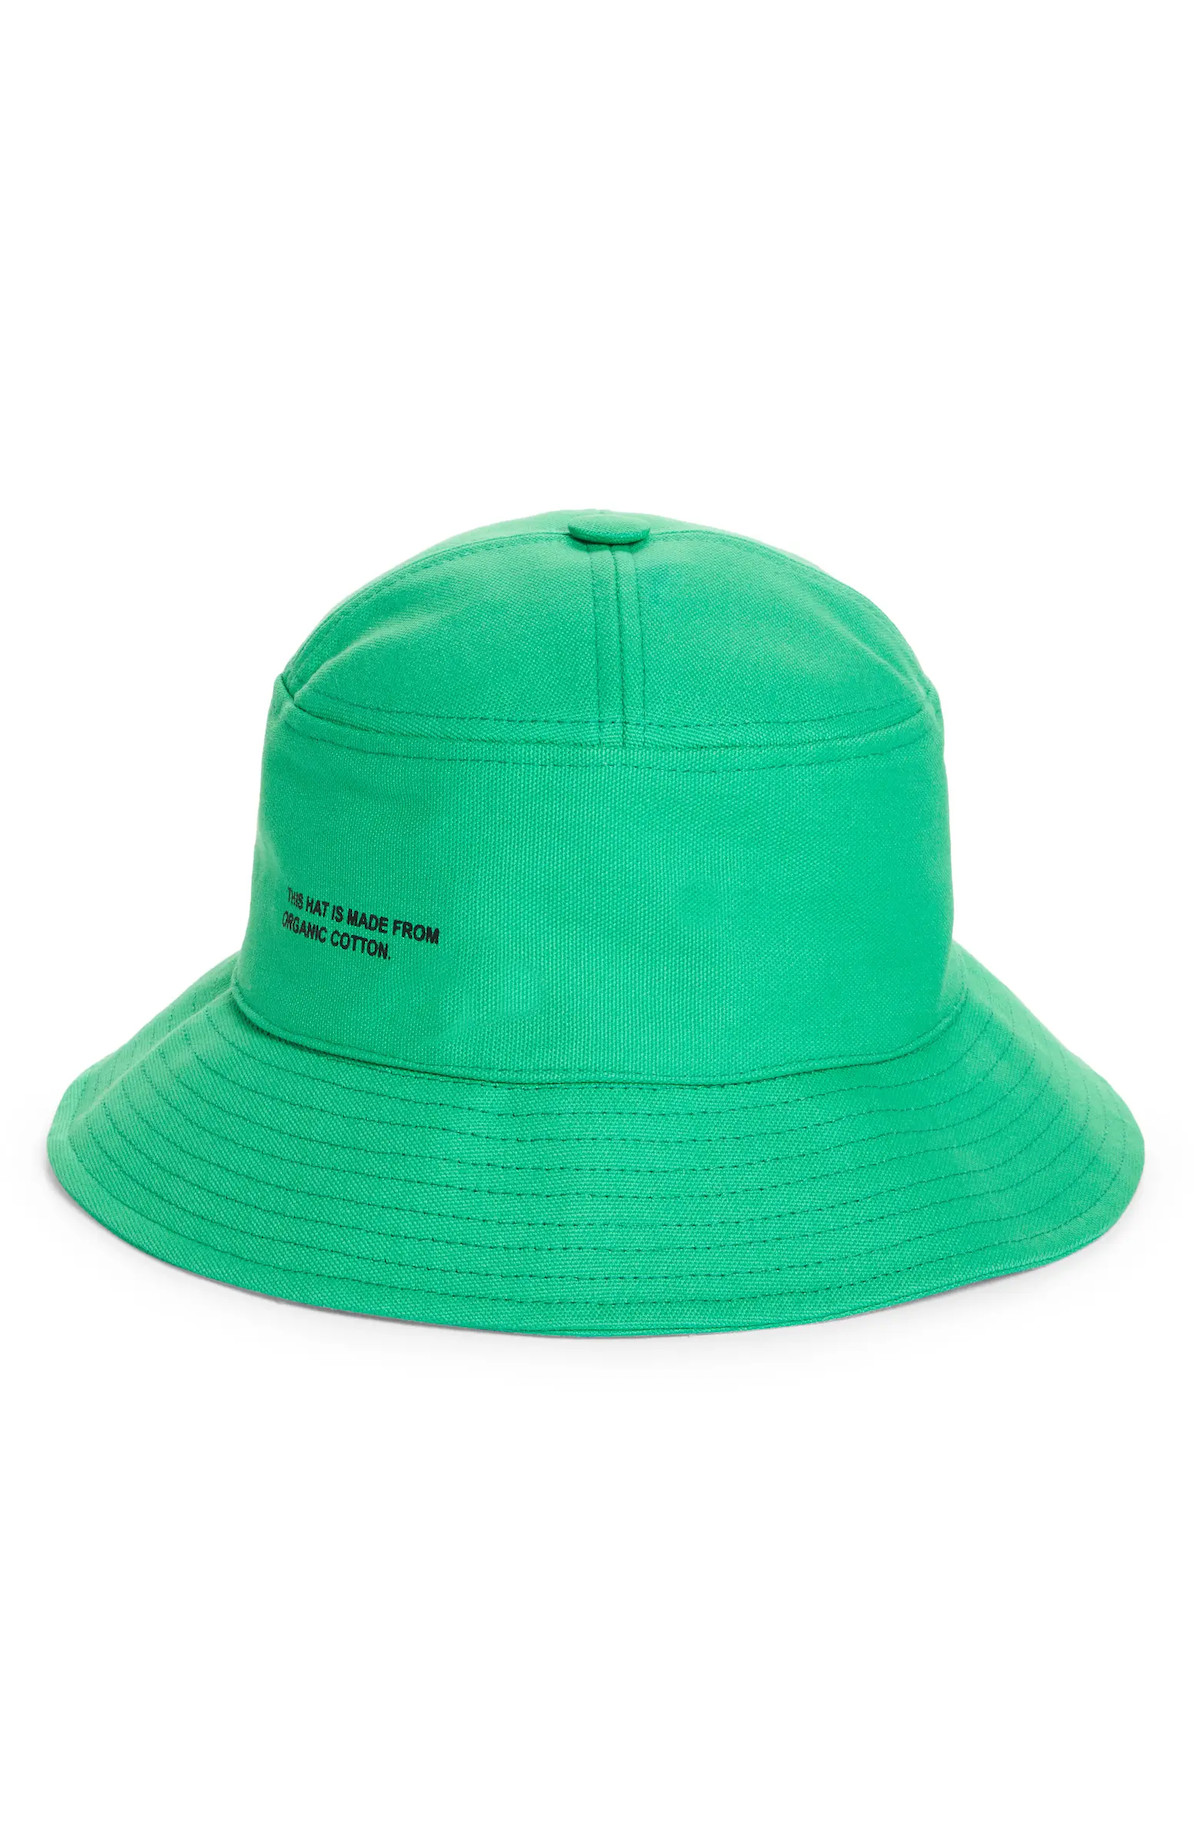 pangaia bucket hat